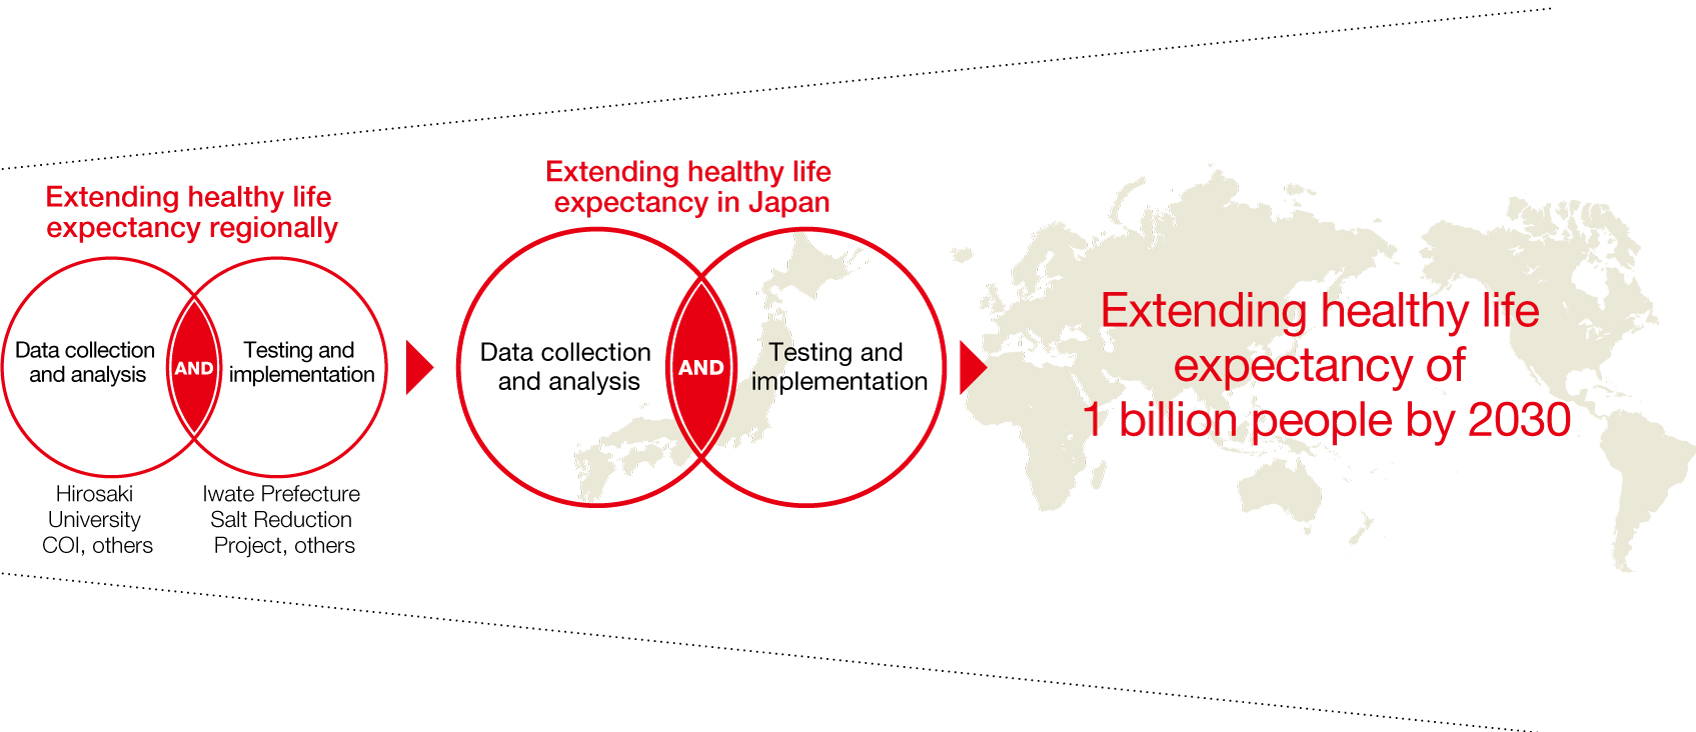 Extending healthy life expectancy worldwide